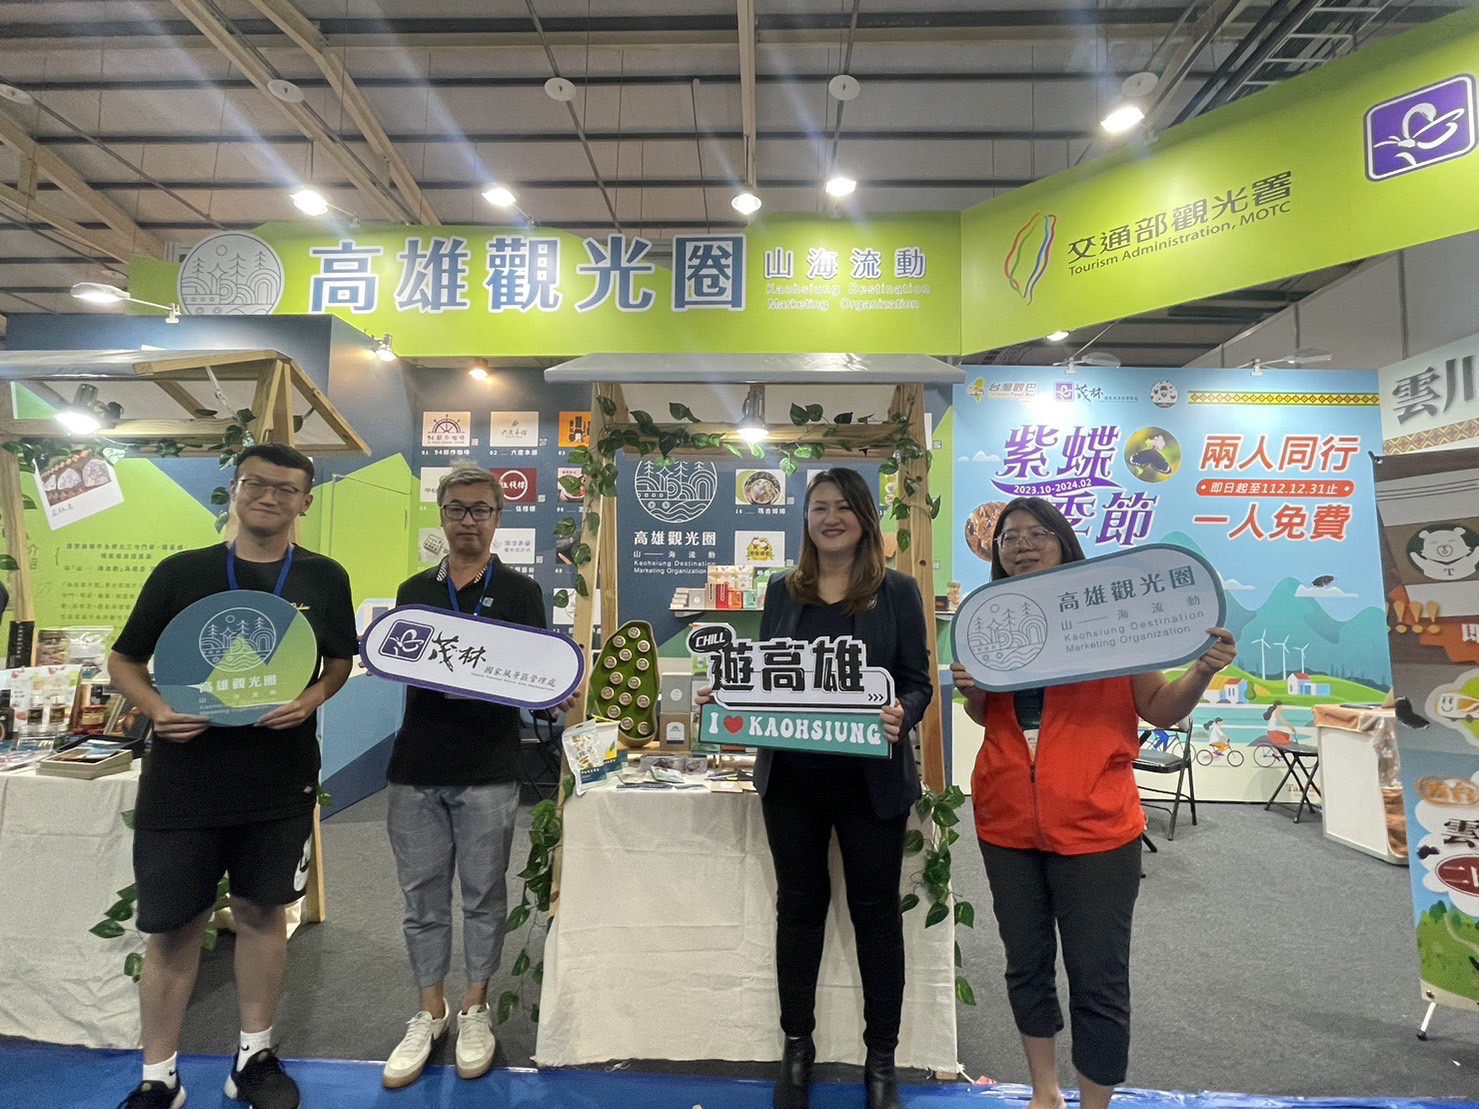 Taichung International Travel Exhibition